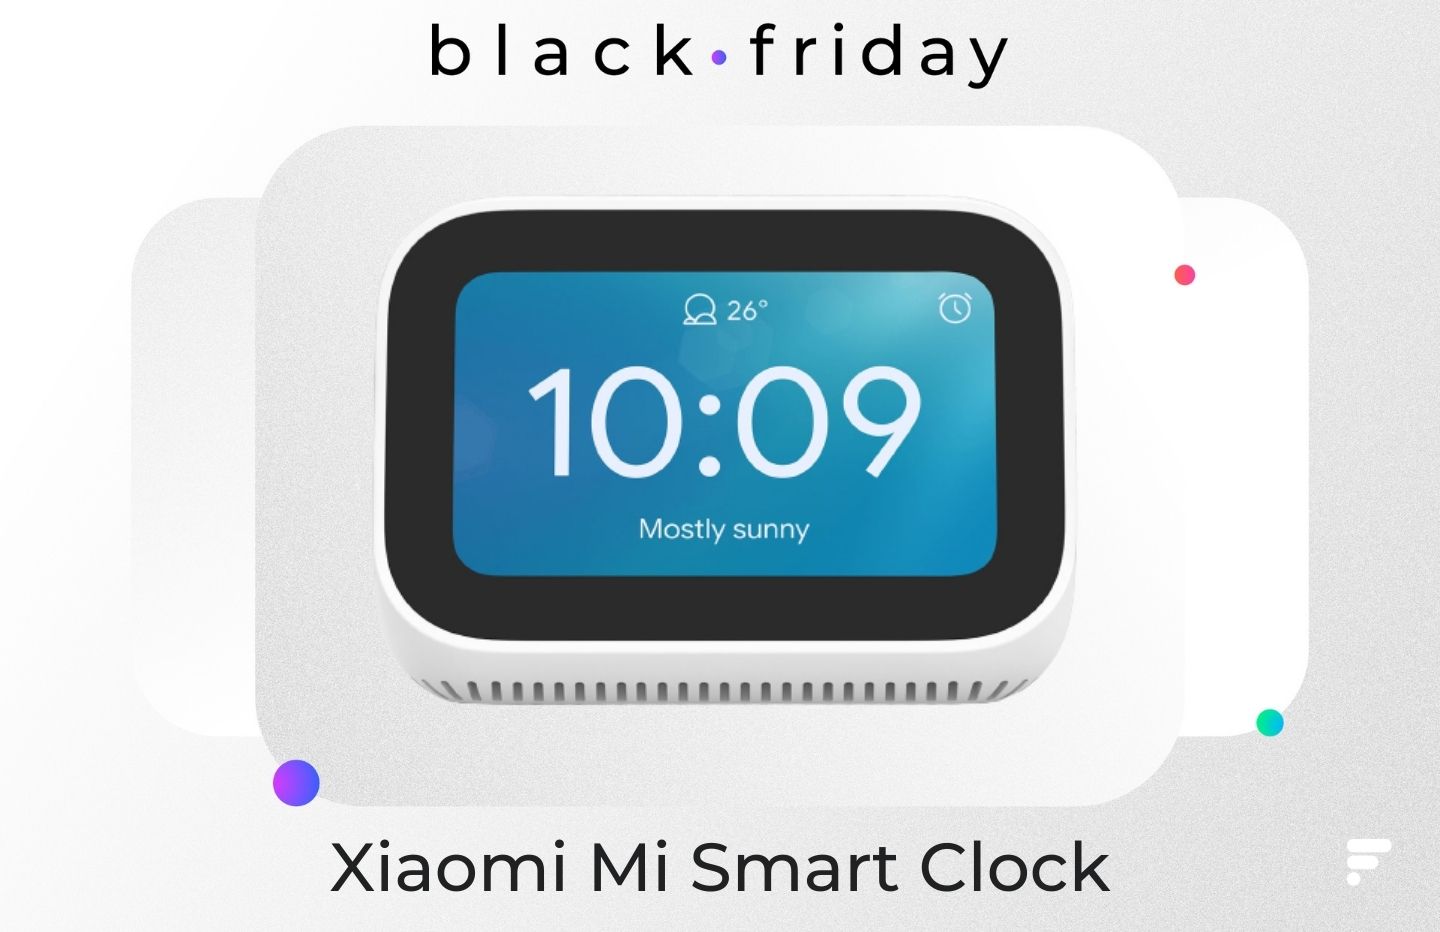 https://images.frandroid.com/wp-content/uploads/2021/11/xiaomi-mi-smart-clock-black-friday.jpg